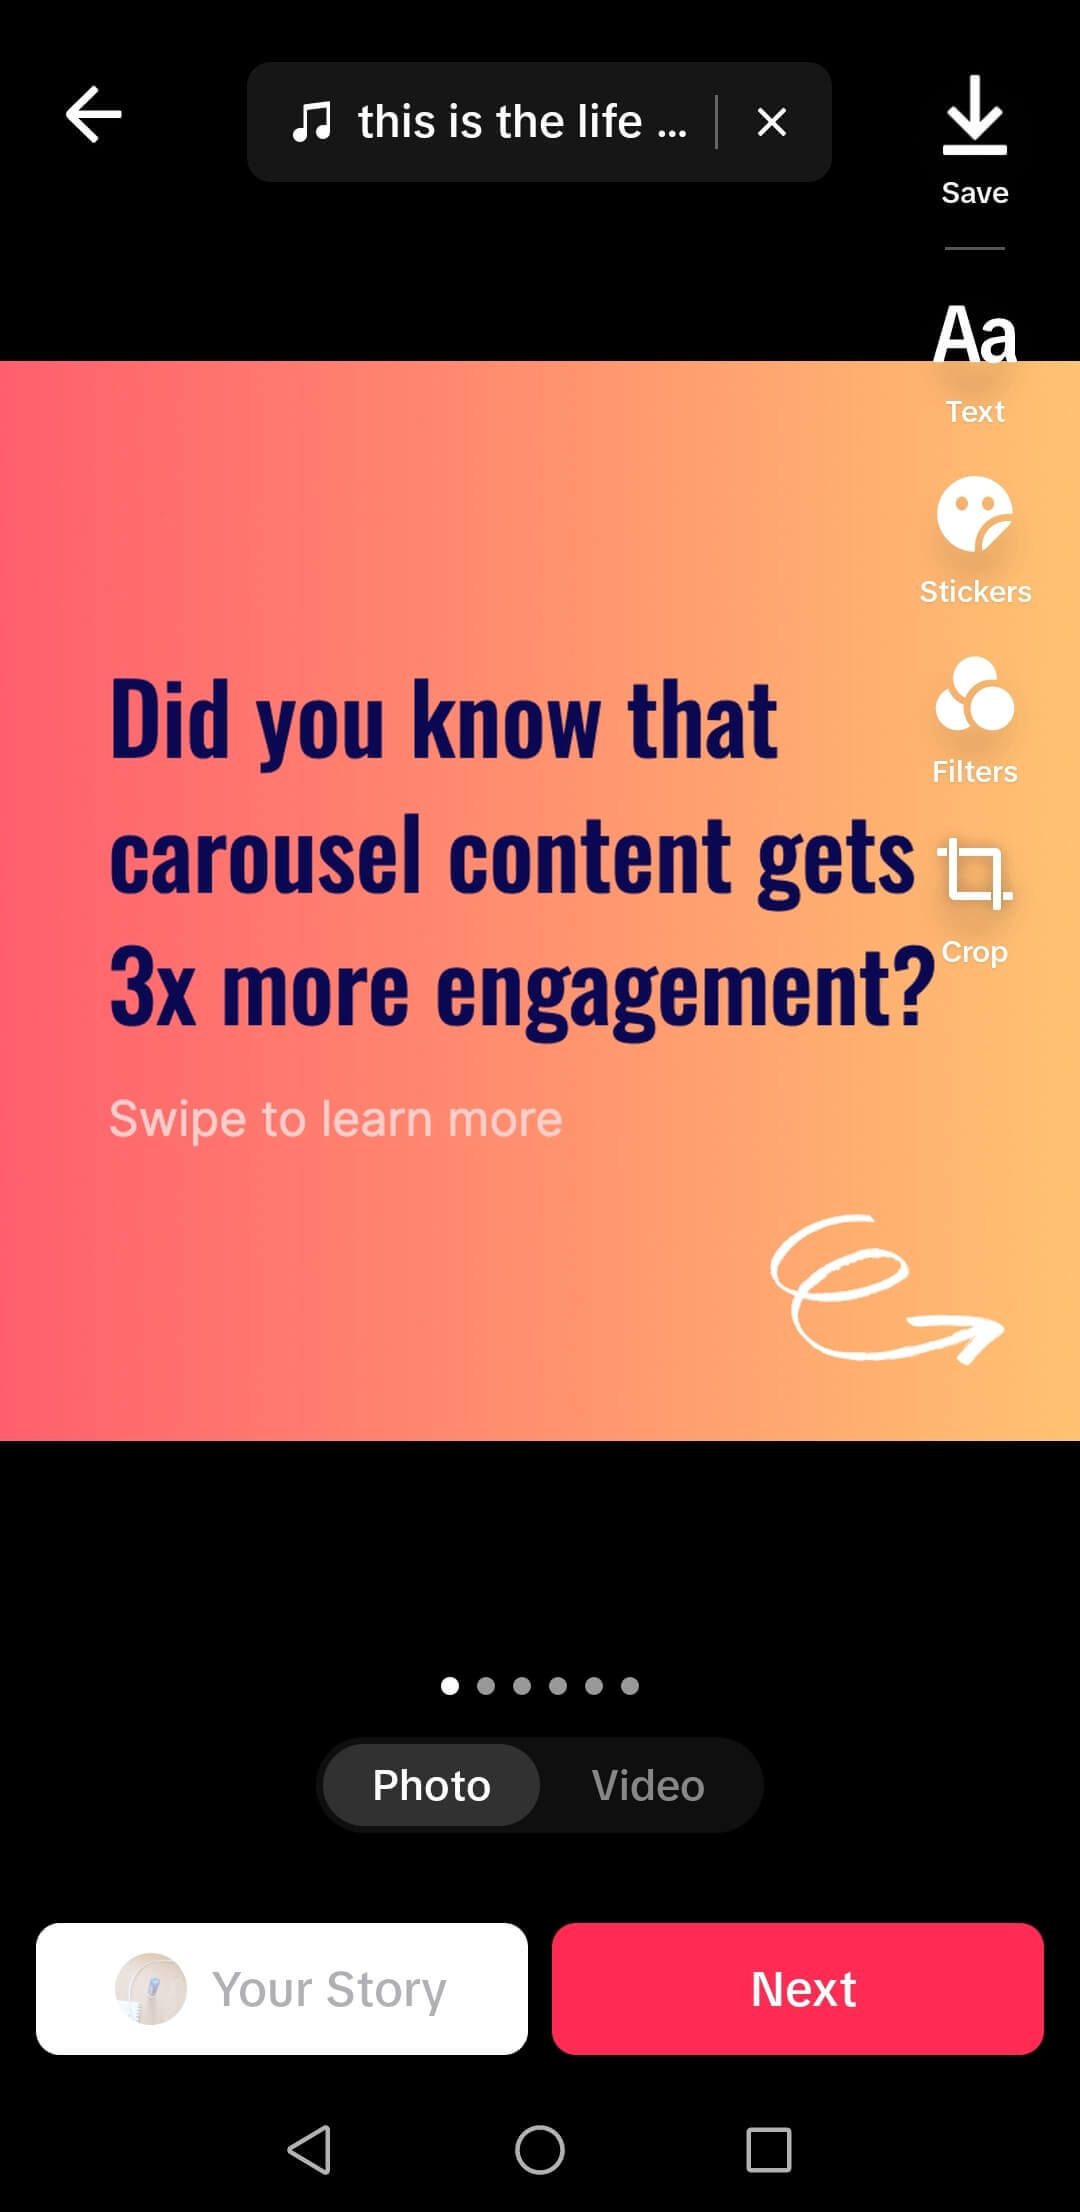 How to post a TikTok Carousel: Step 7 - Edit carousel